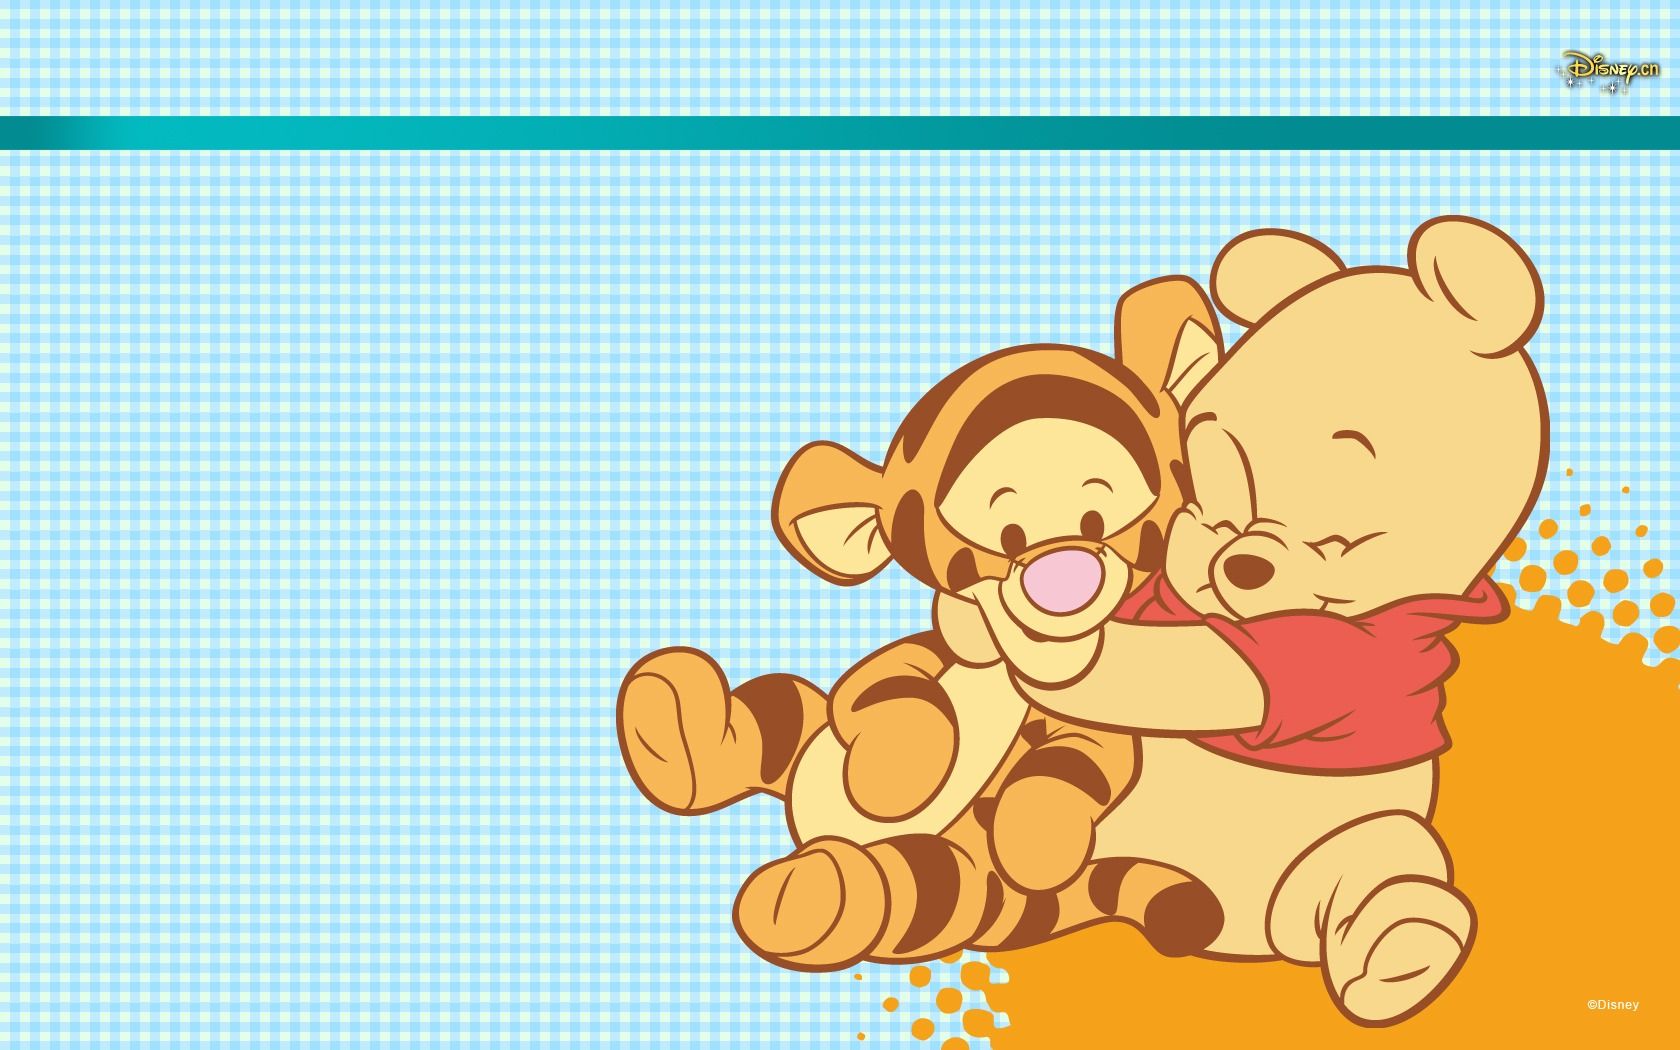 pooh - My Melody Wallpaper (33328219) - Fanpop